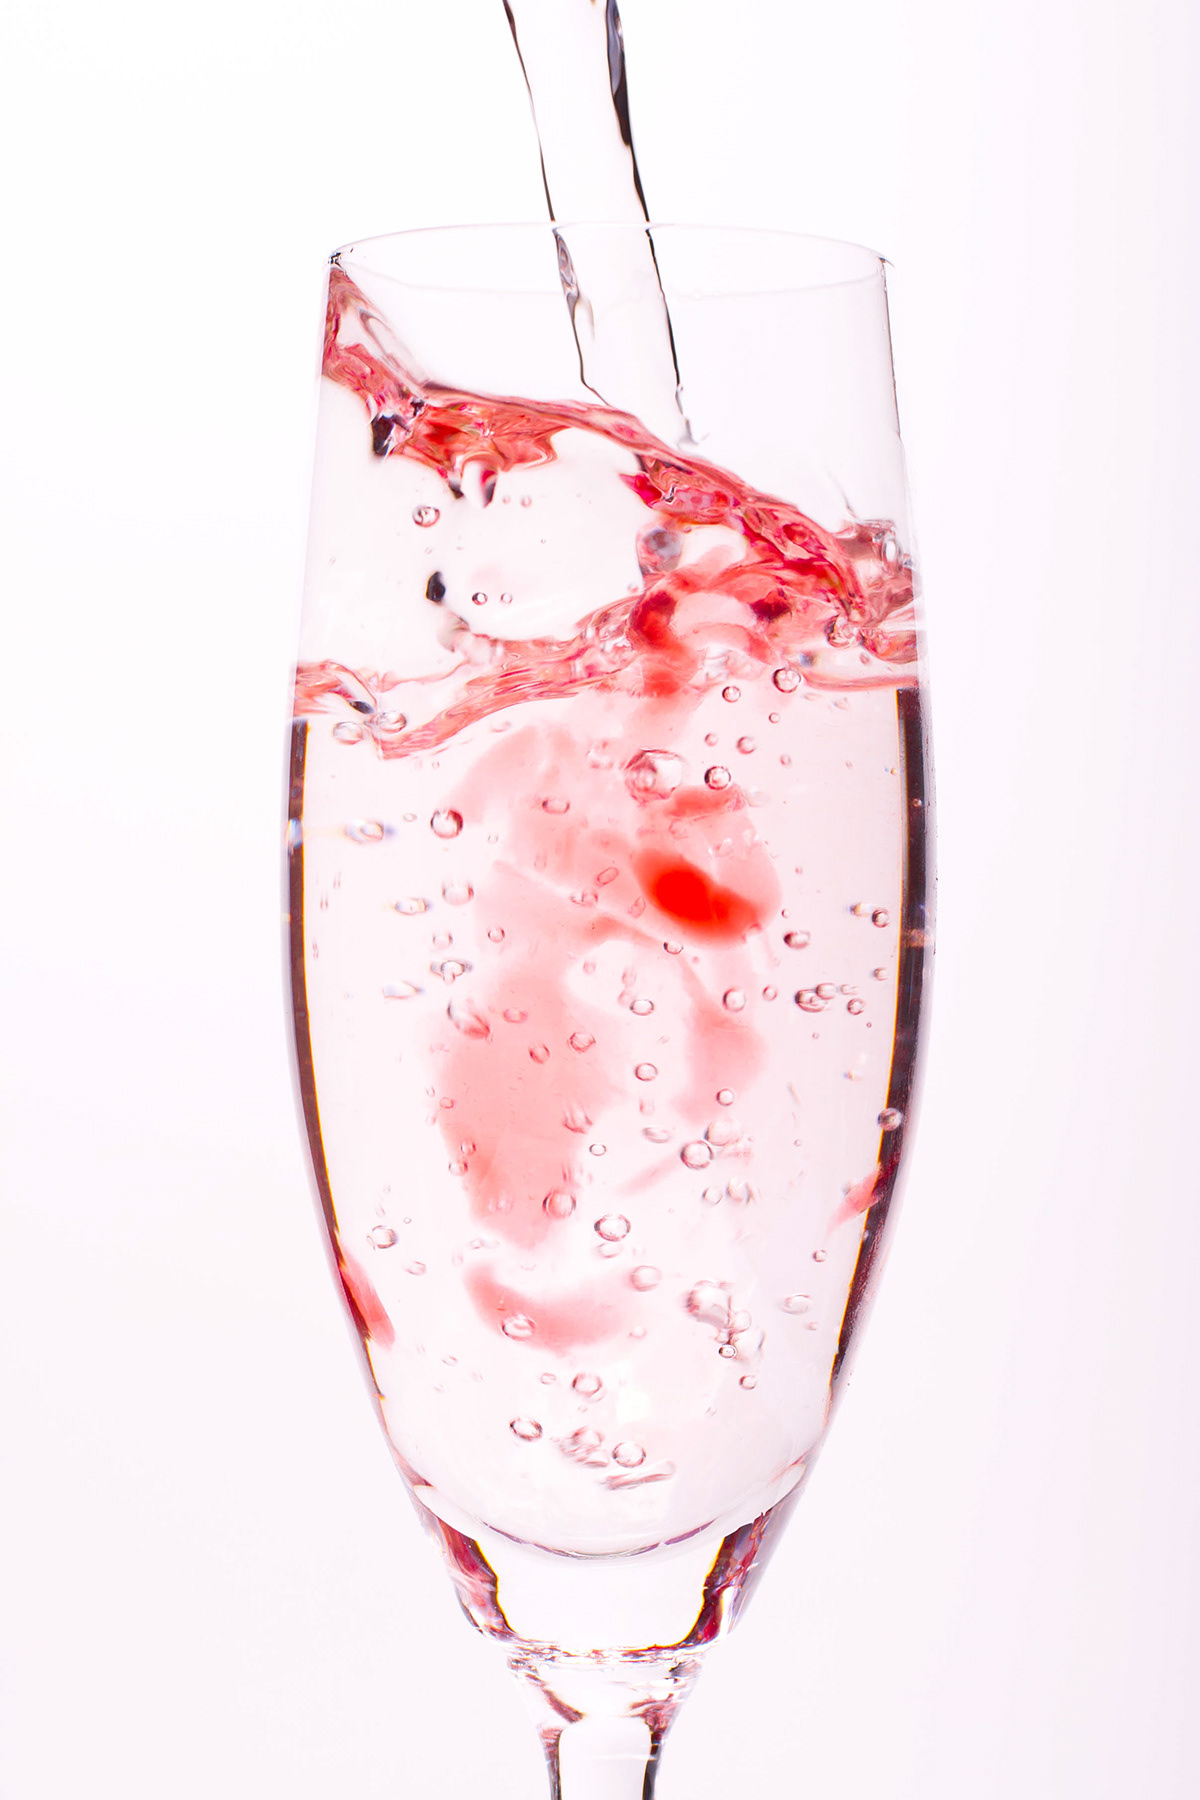 water red deform shapes dissolve bubbles splash fast shutter Form Liquid glass